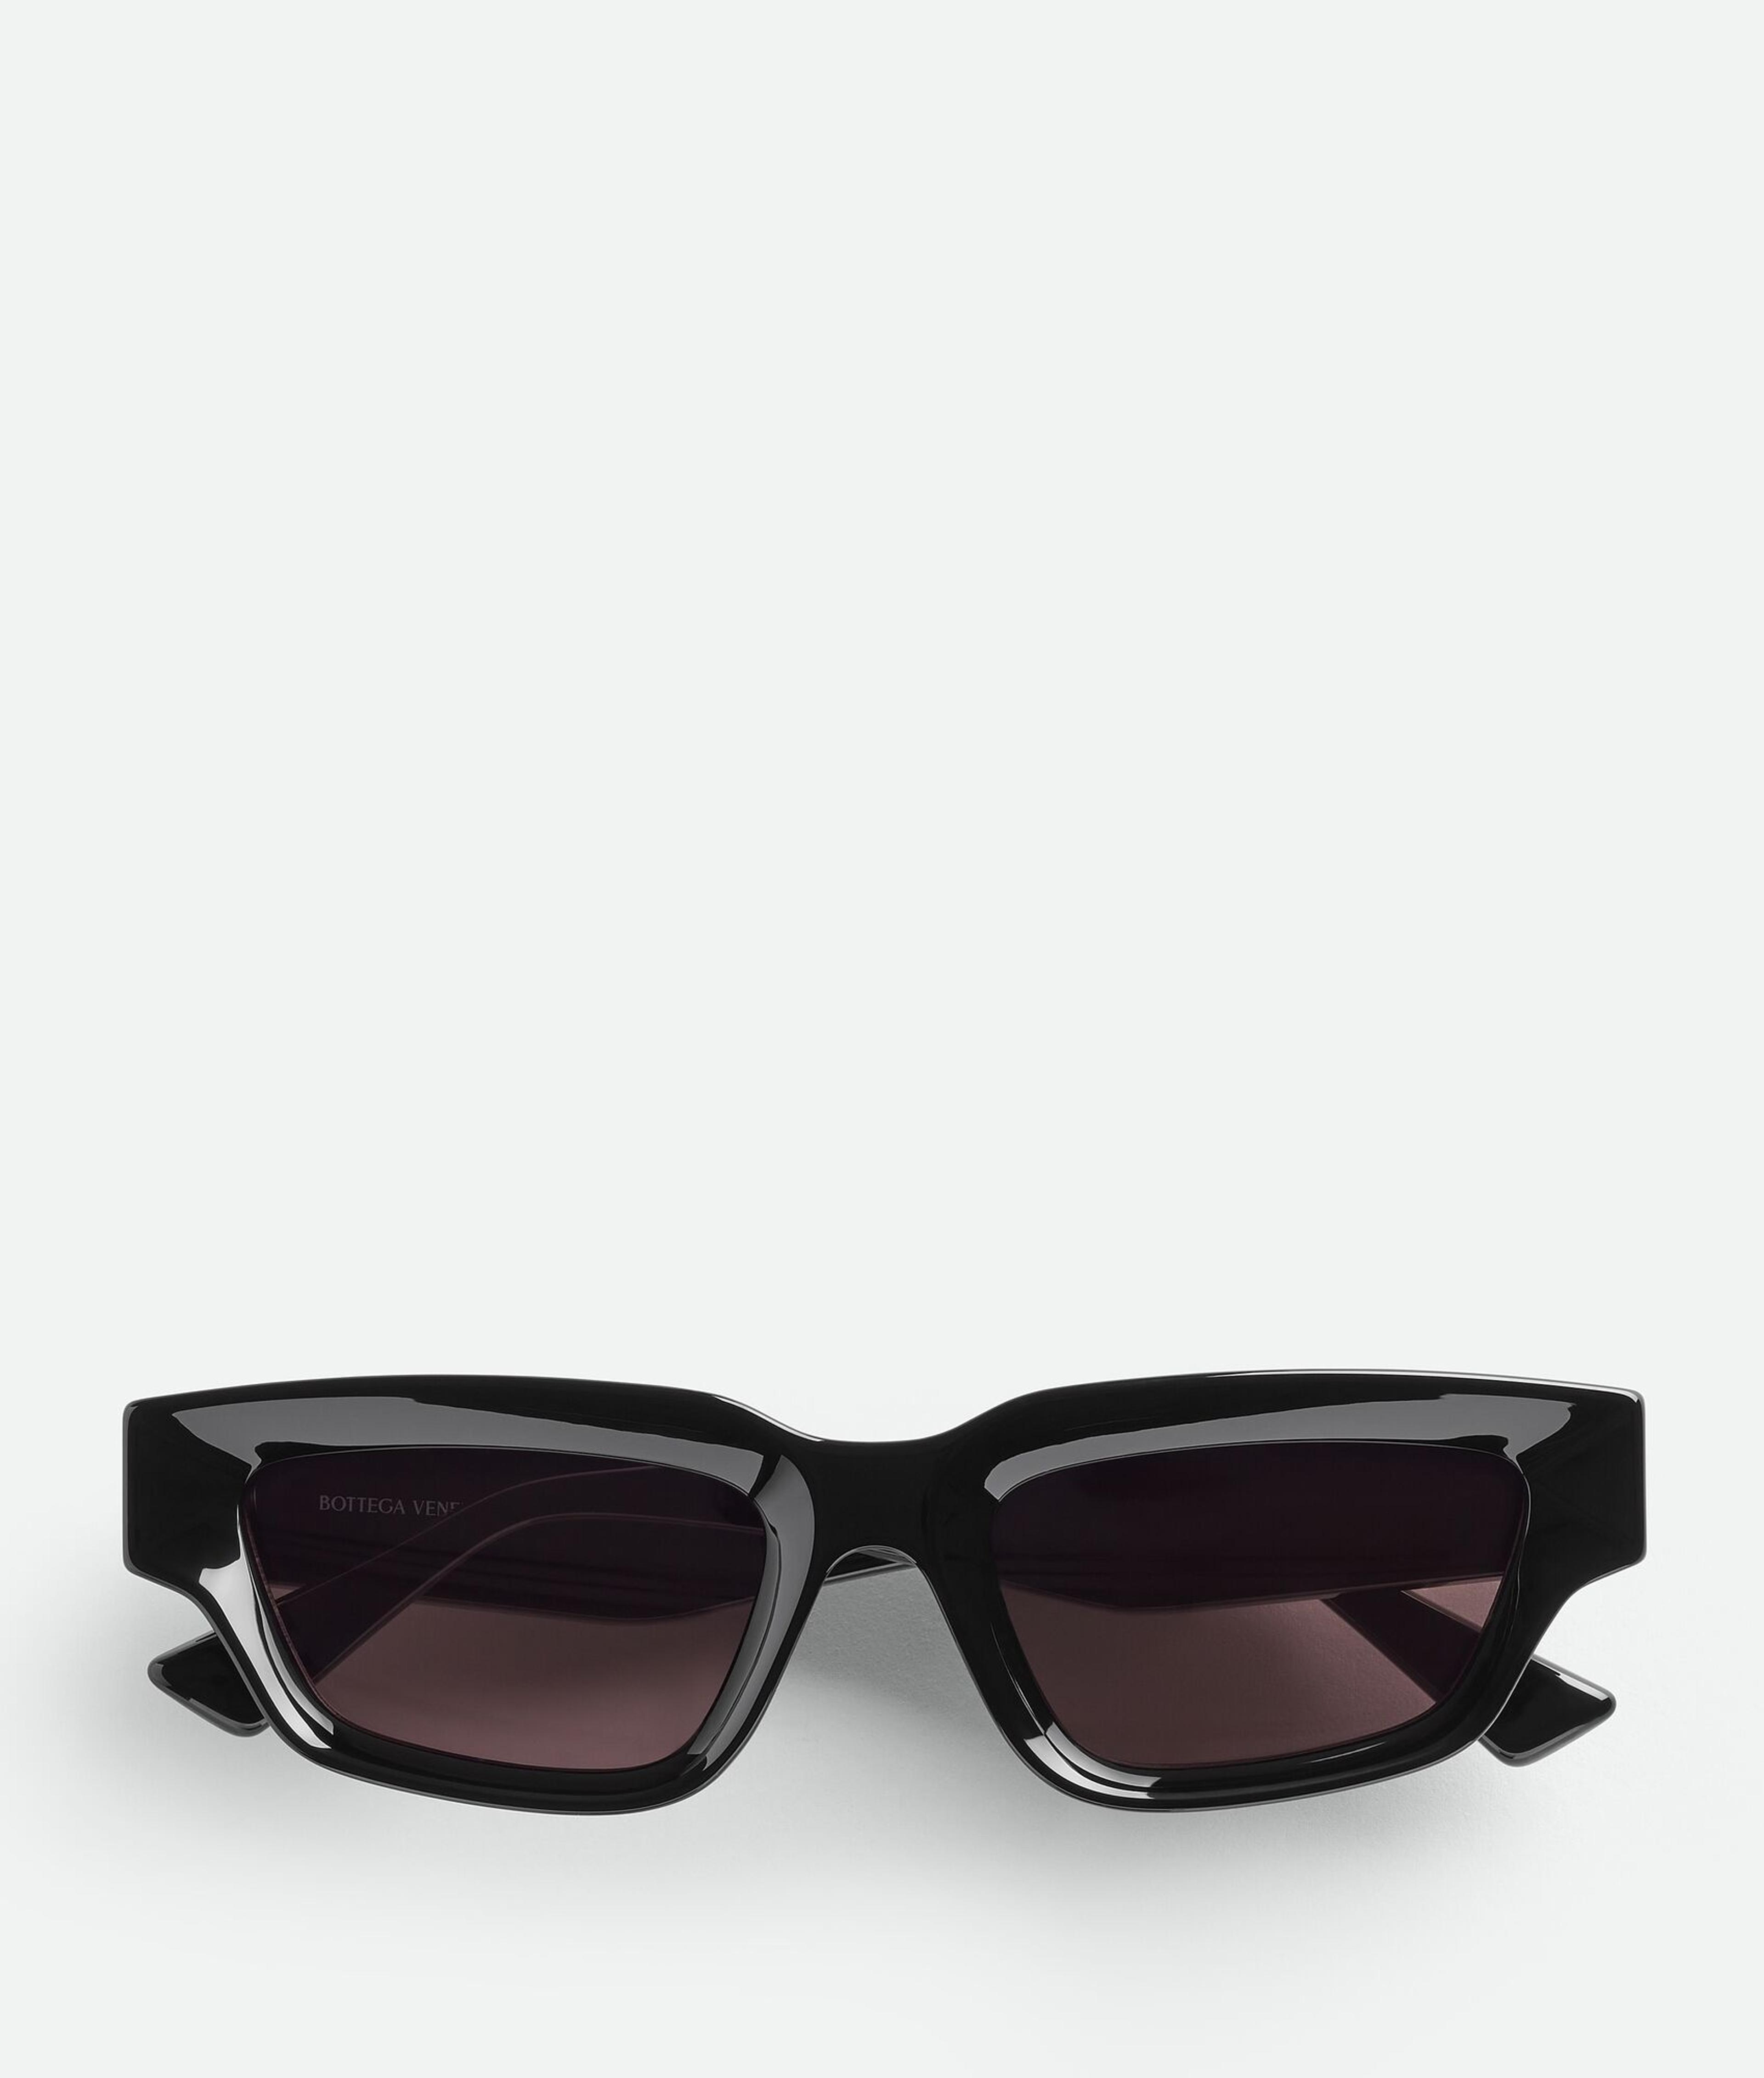 Bottega Veneta® Sharp Square Sunglasses in Black/grey. Shop online now.